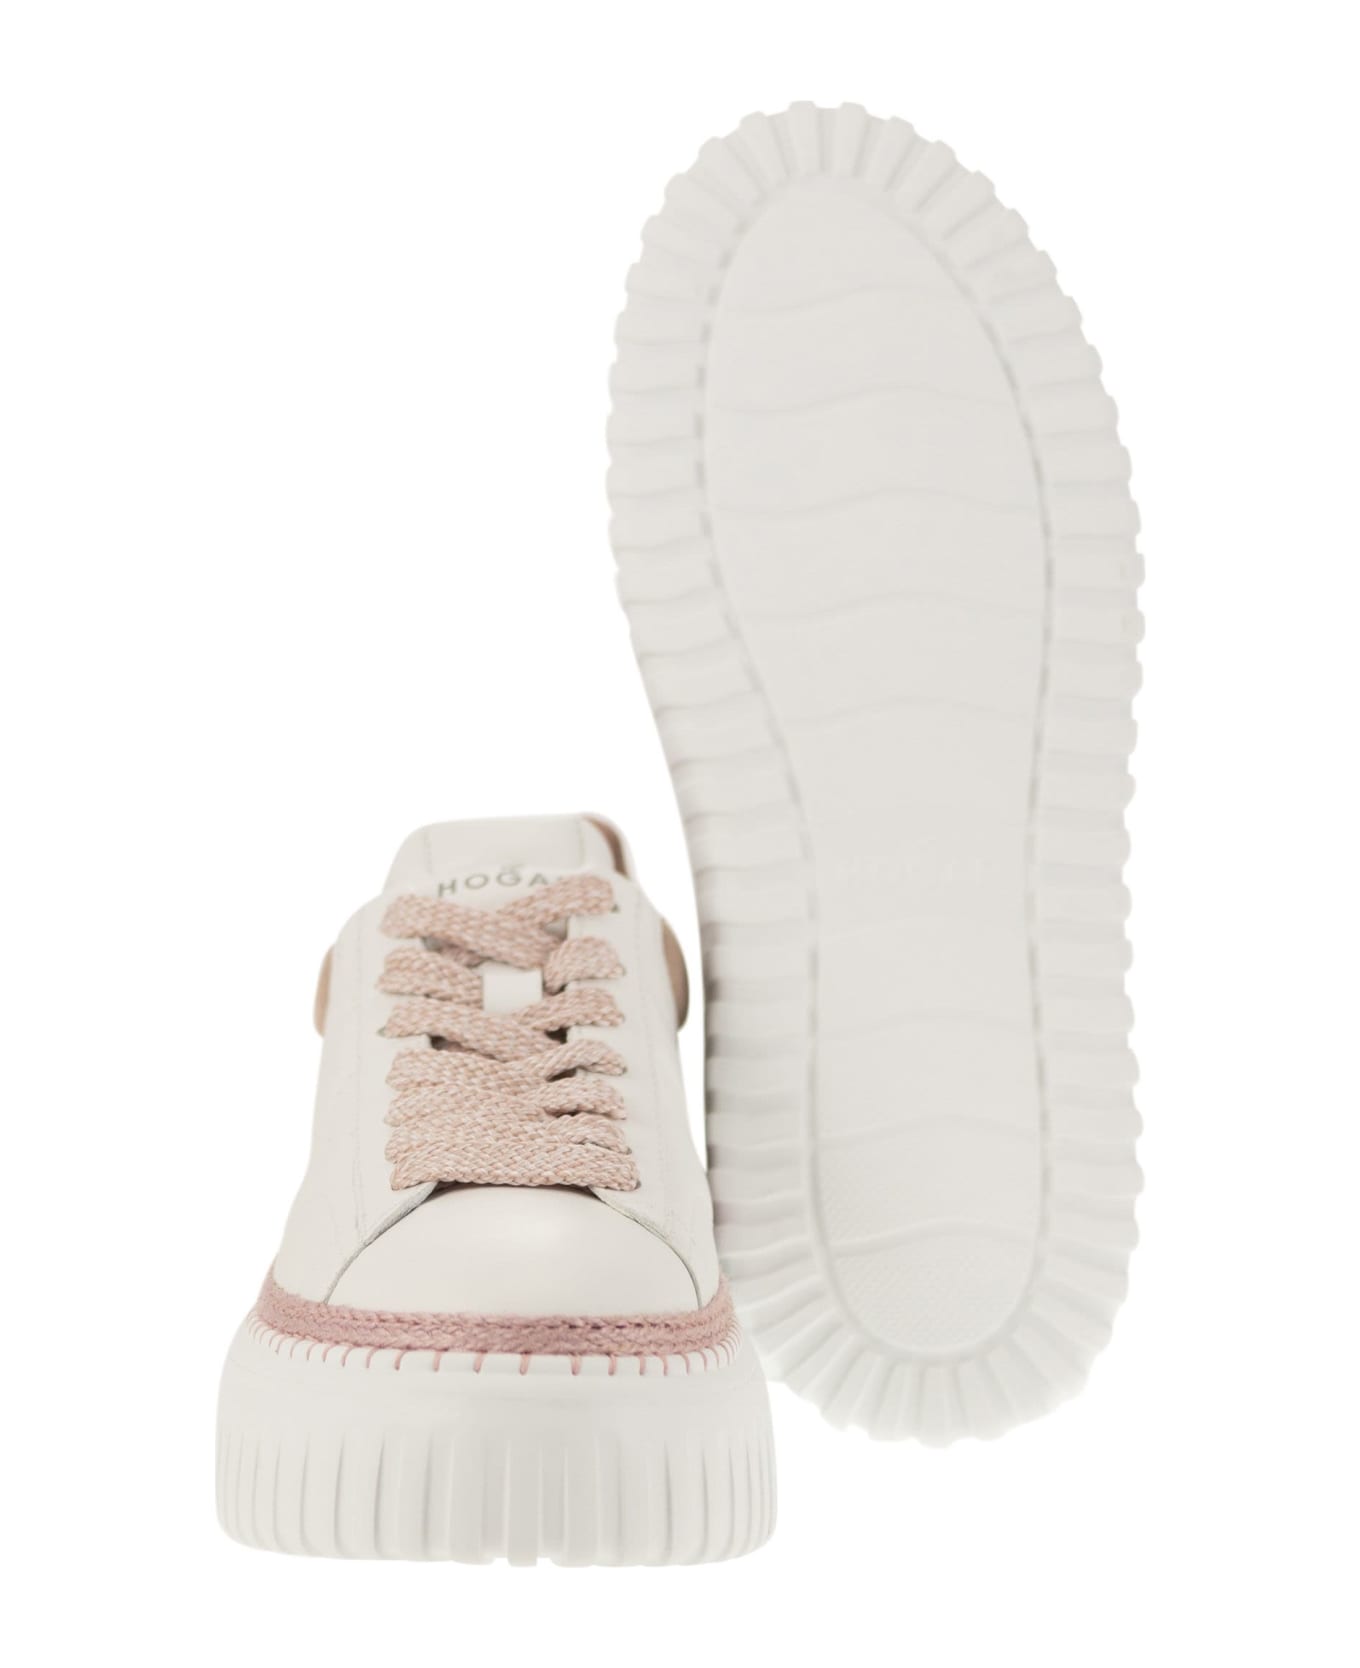 Hogan H-stripes - Sneakers - White/pink ウェッジシューズ